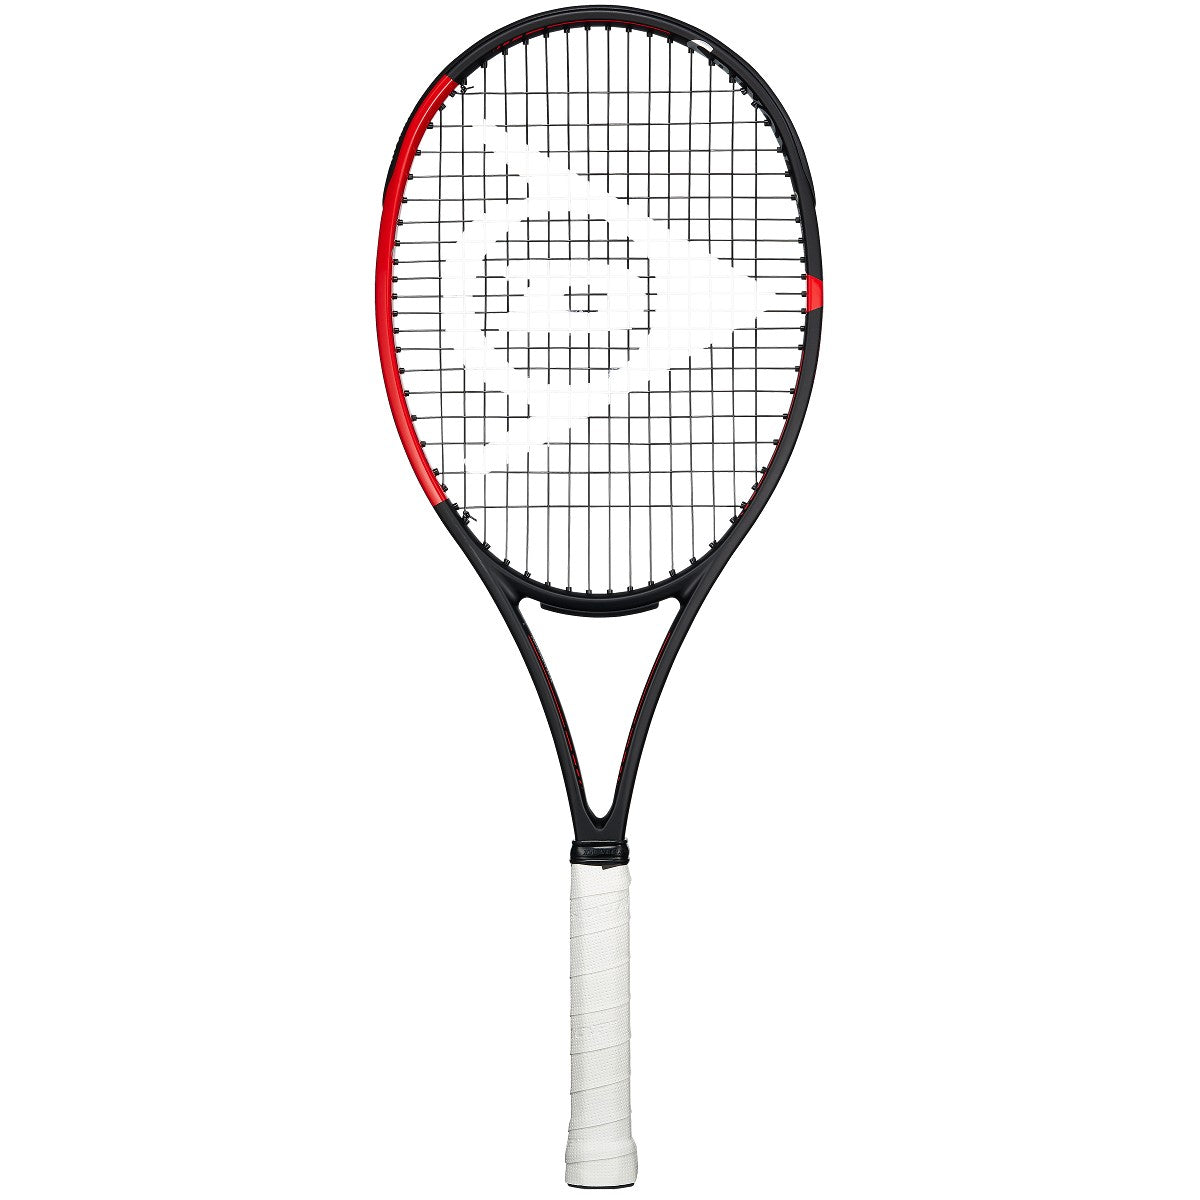 SRX 19 CX200 LS G3 Tennis Racket